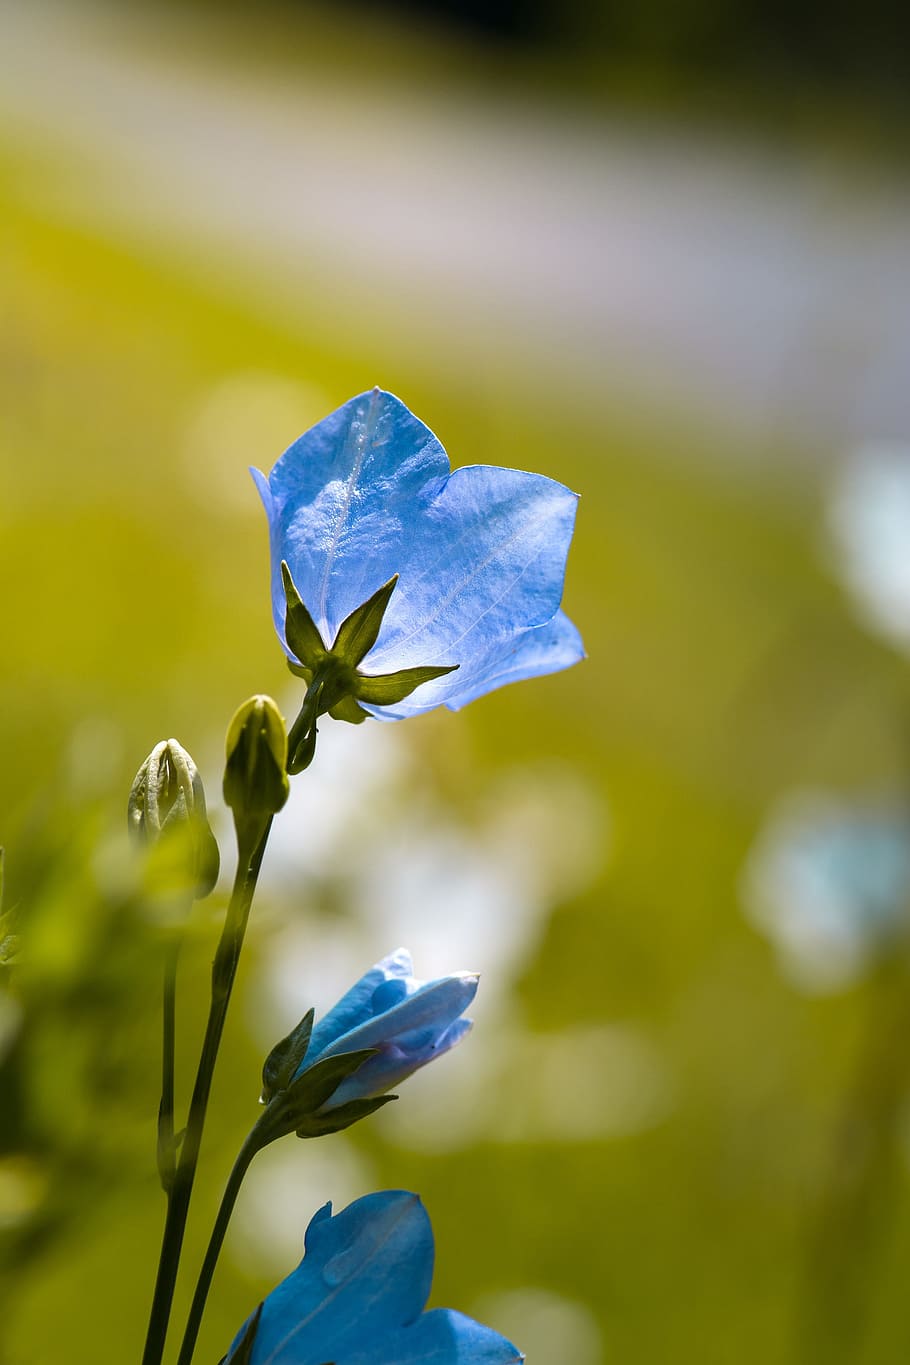 selektif, foto fokus, biru, bunga petaled, bunga, bellflower, bunga biru, taman, taman bunga, di taman